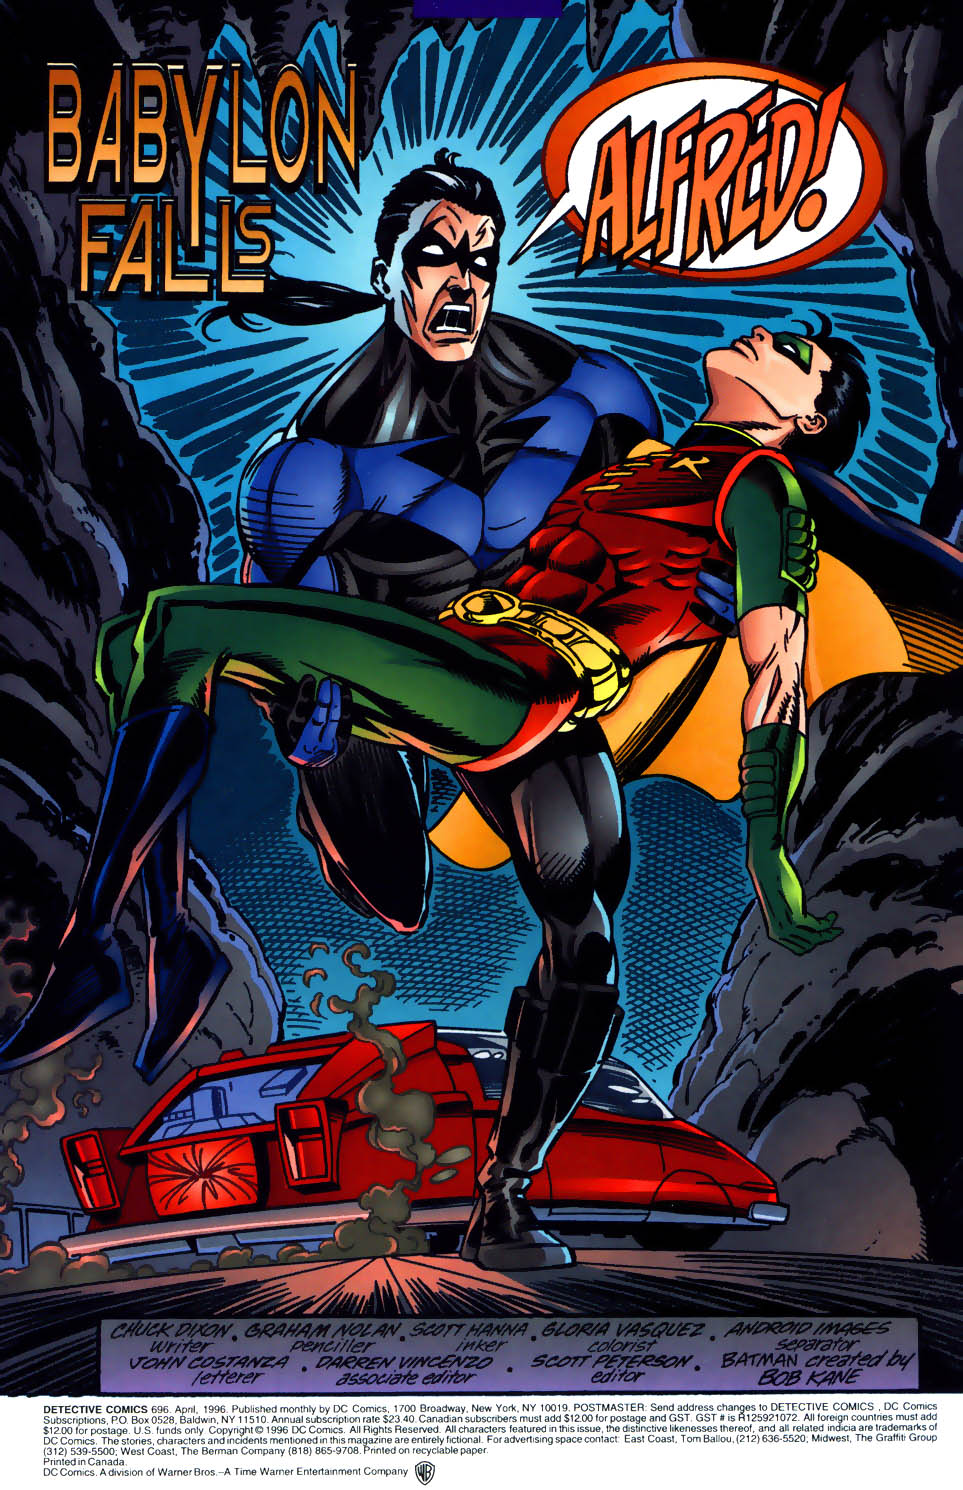 Batman Contagion Issue 8 | Read Batman Contagion Issue 8 comic online in  high quality. Read Full Comic online for free - Read comics online in high  quality .|